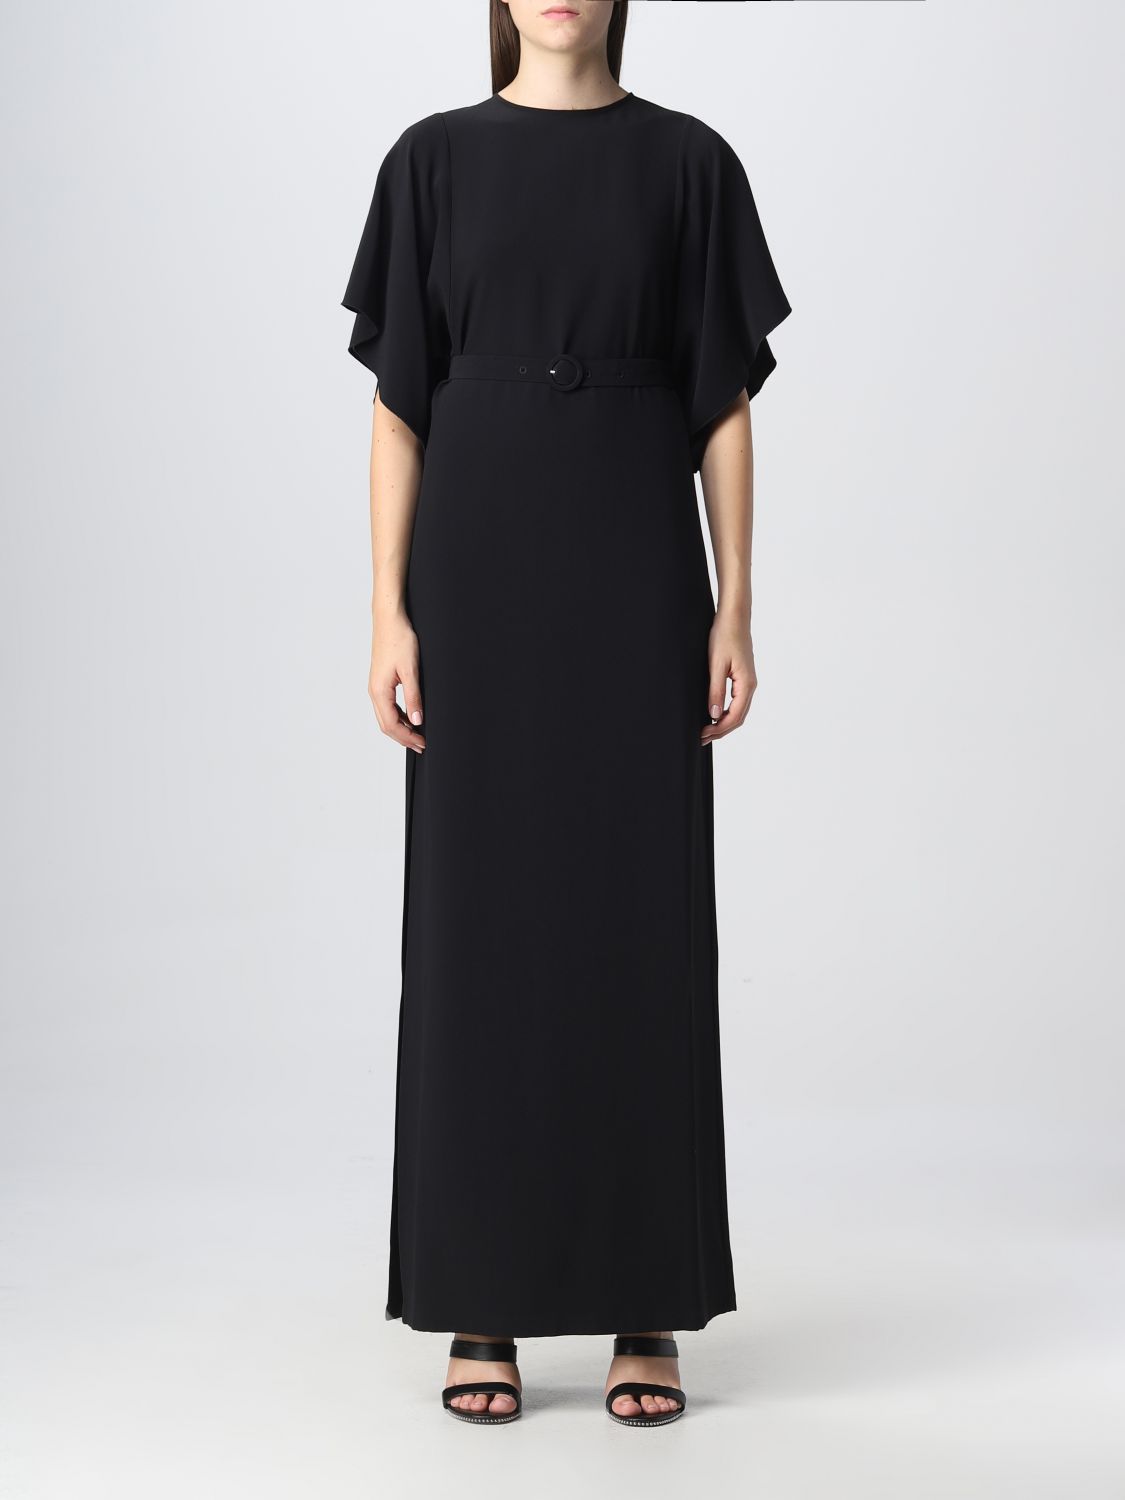 erika-cavallini-dress-for-woman-black-erika-cavallini-dress-p2wr05